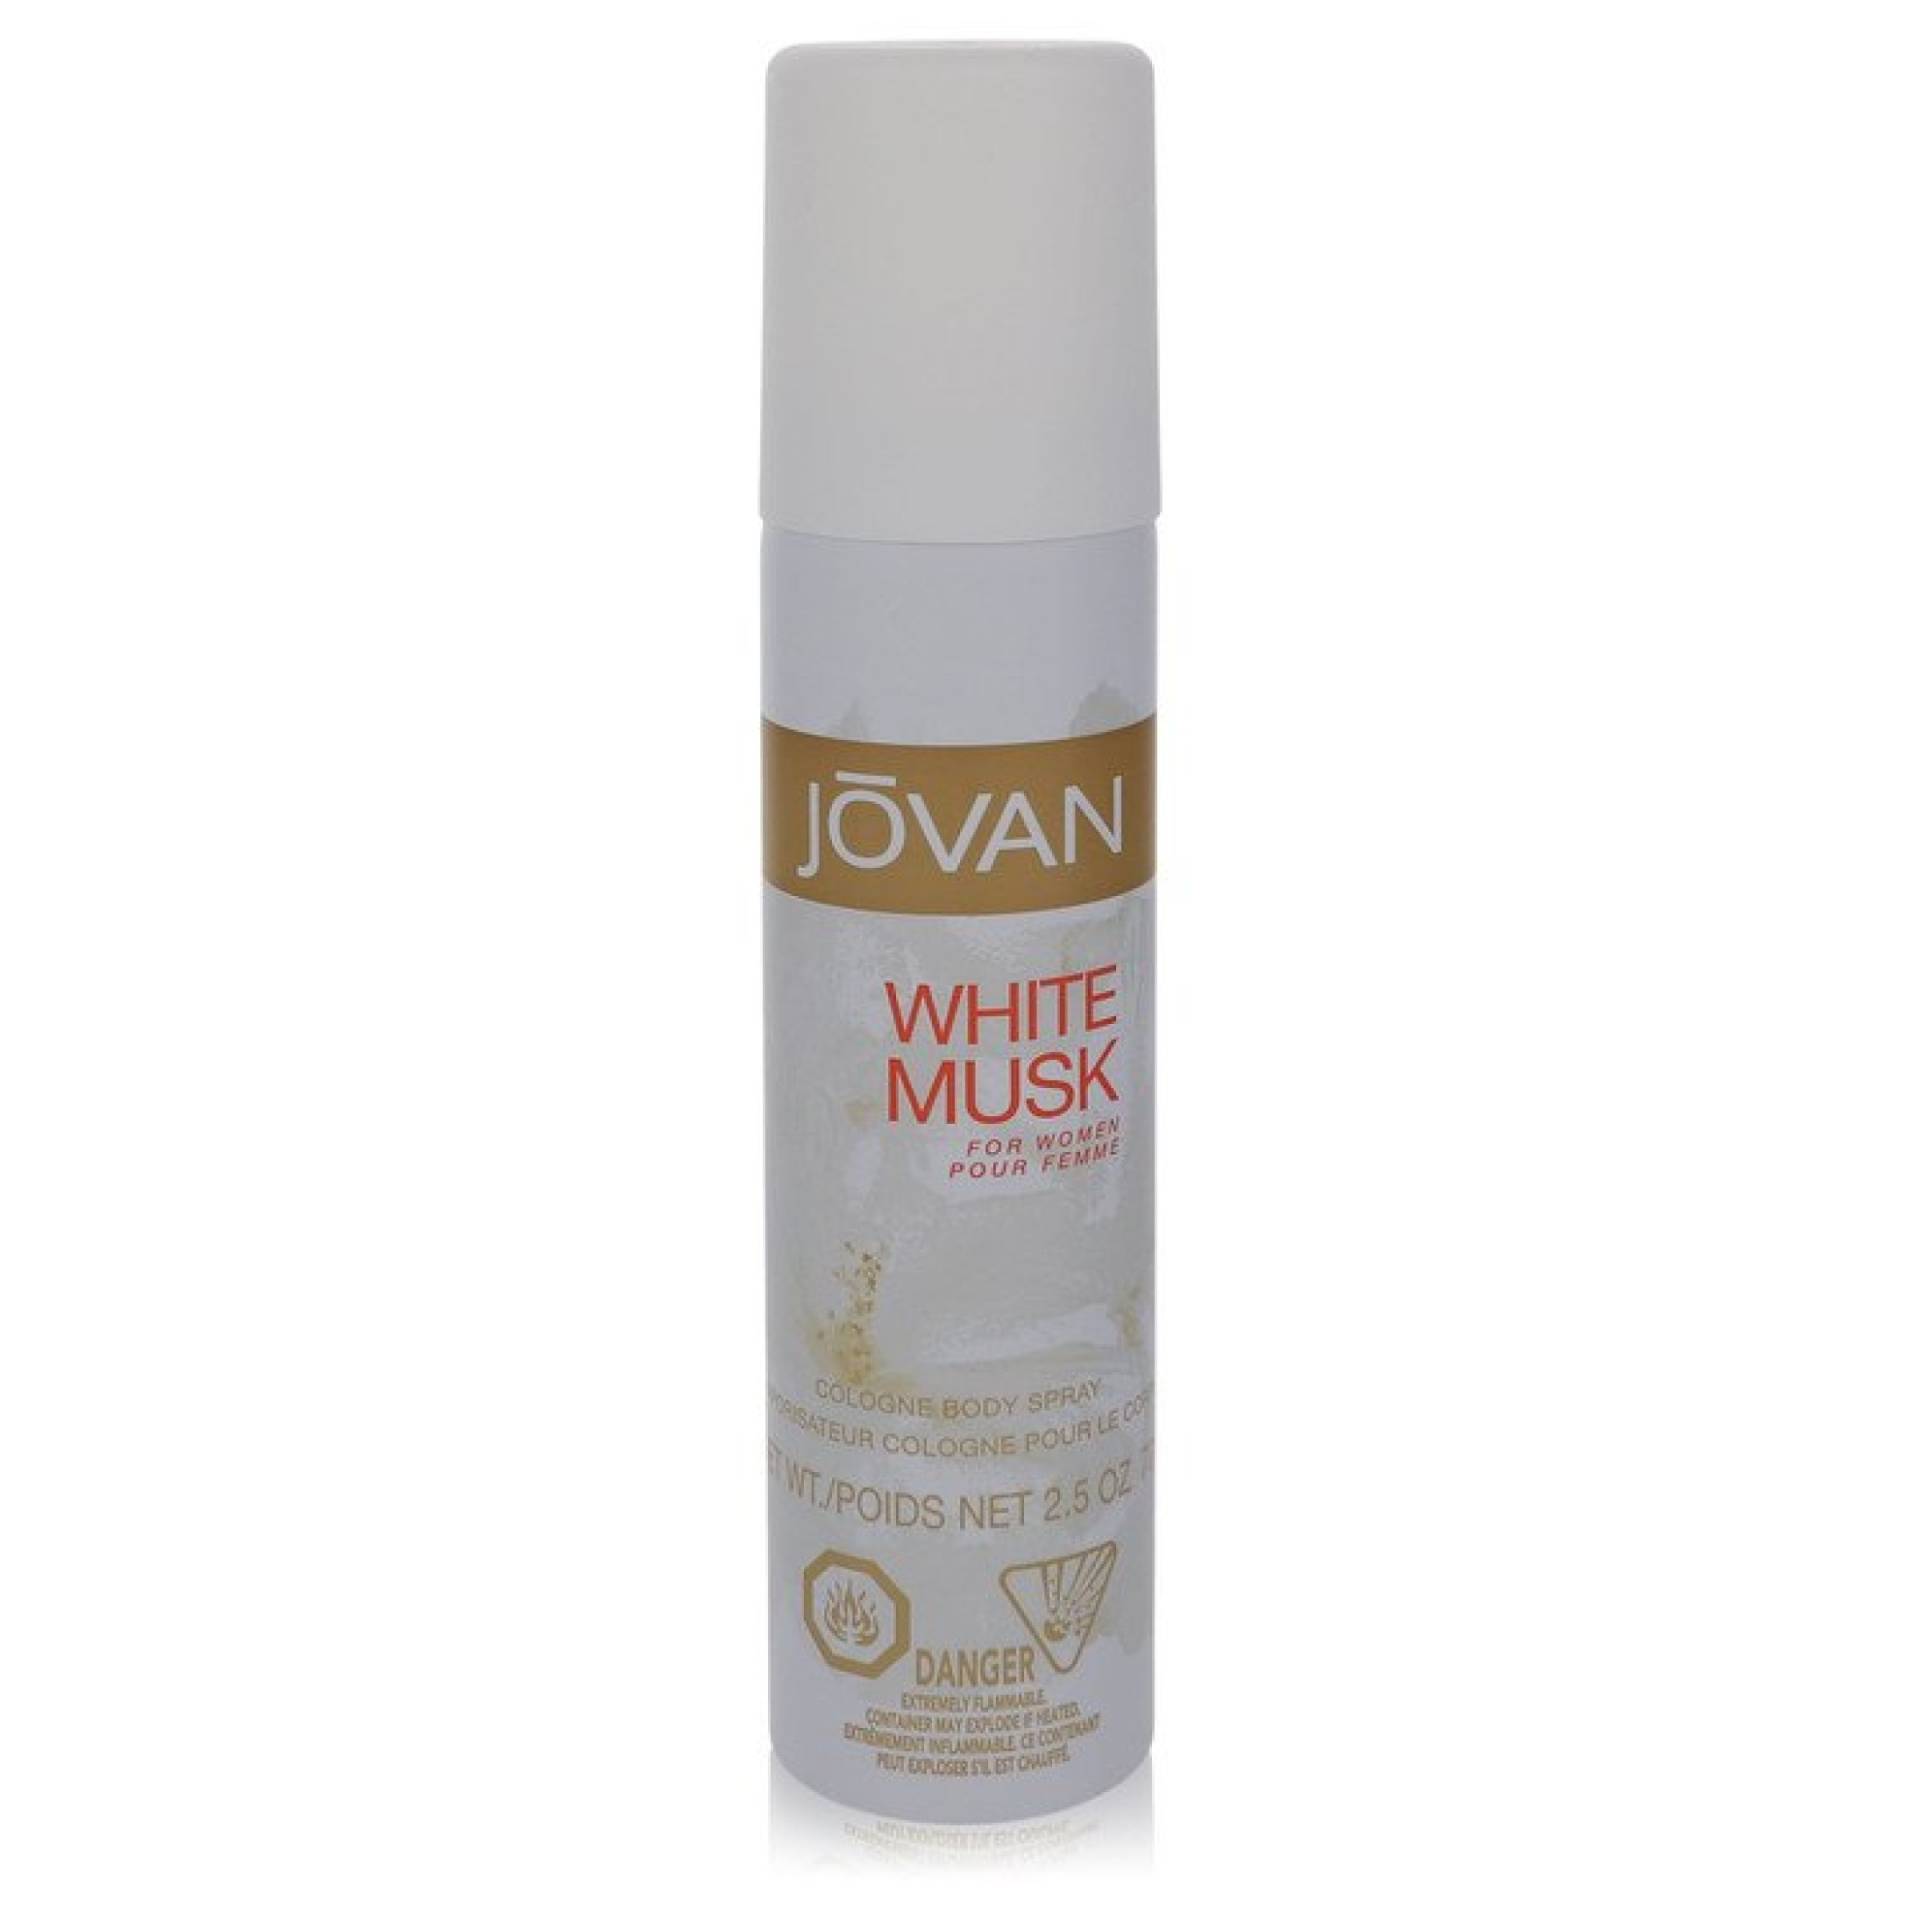 Jovan JOVAN WHITE MUSK Body Spray 75 ml